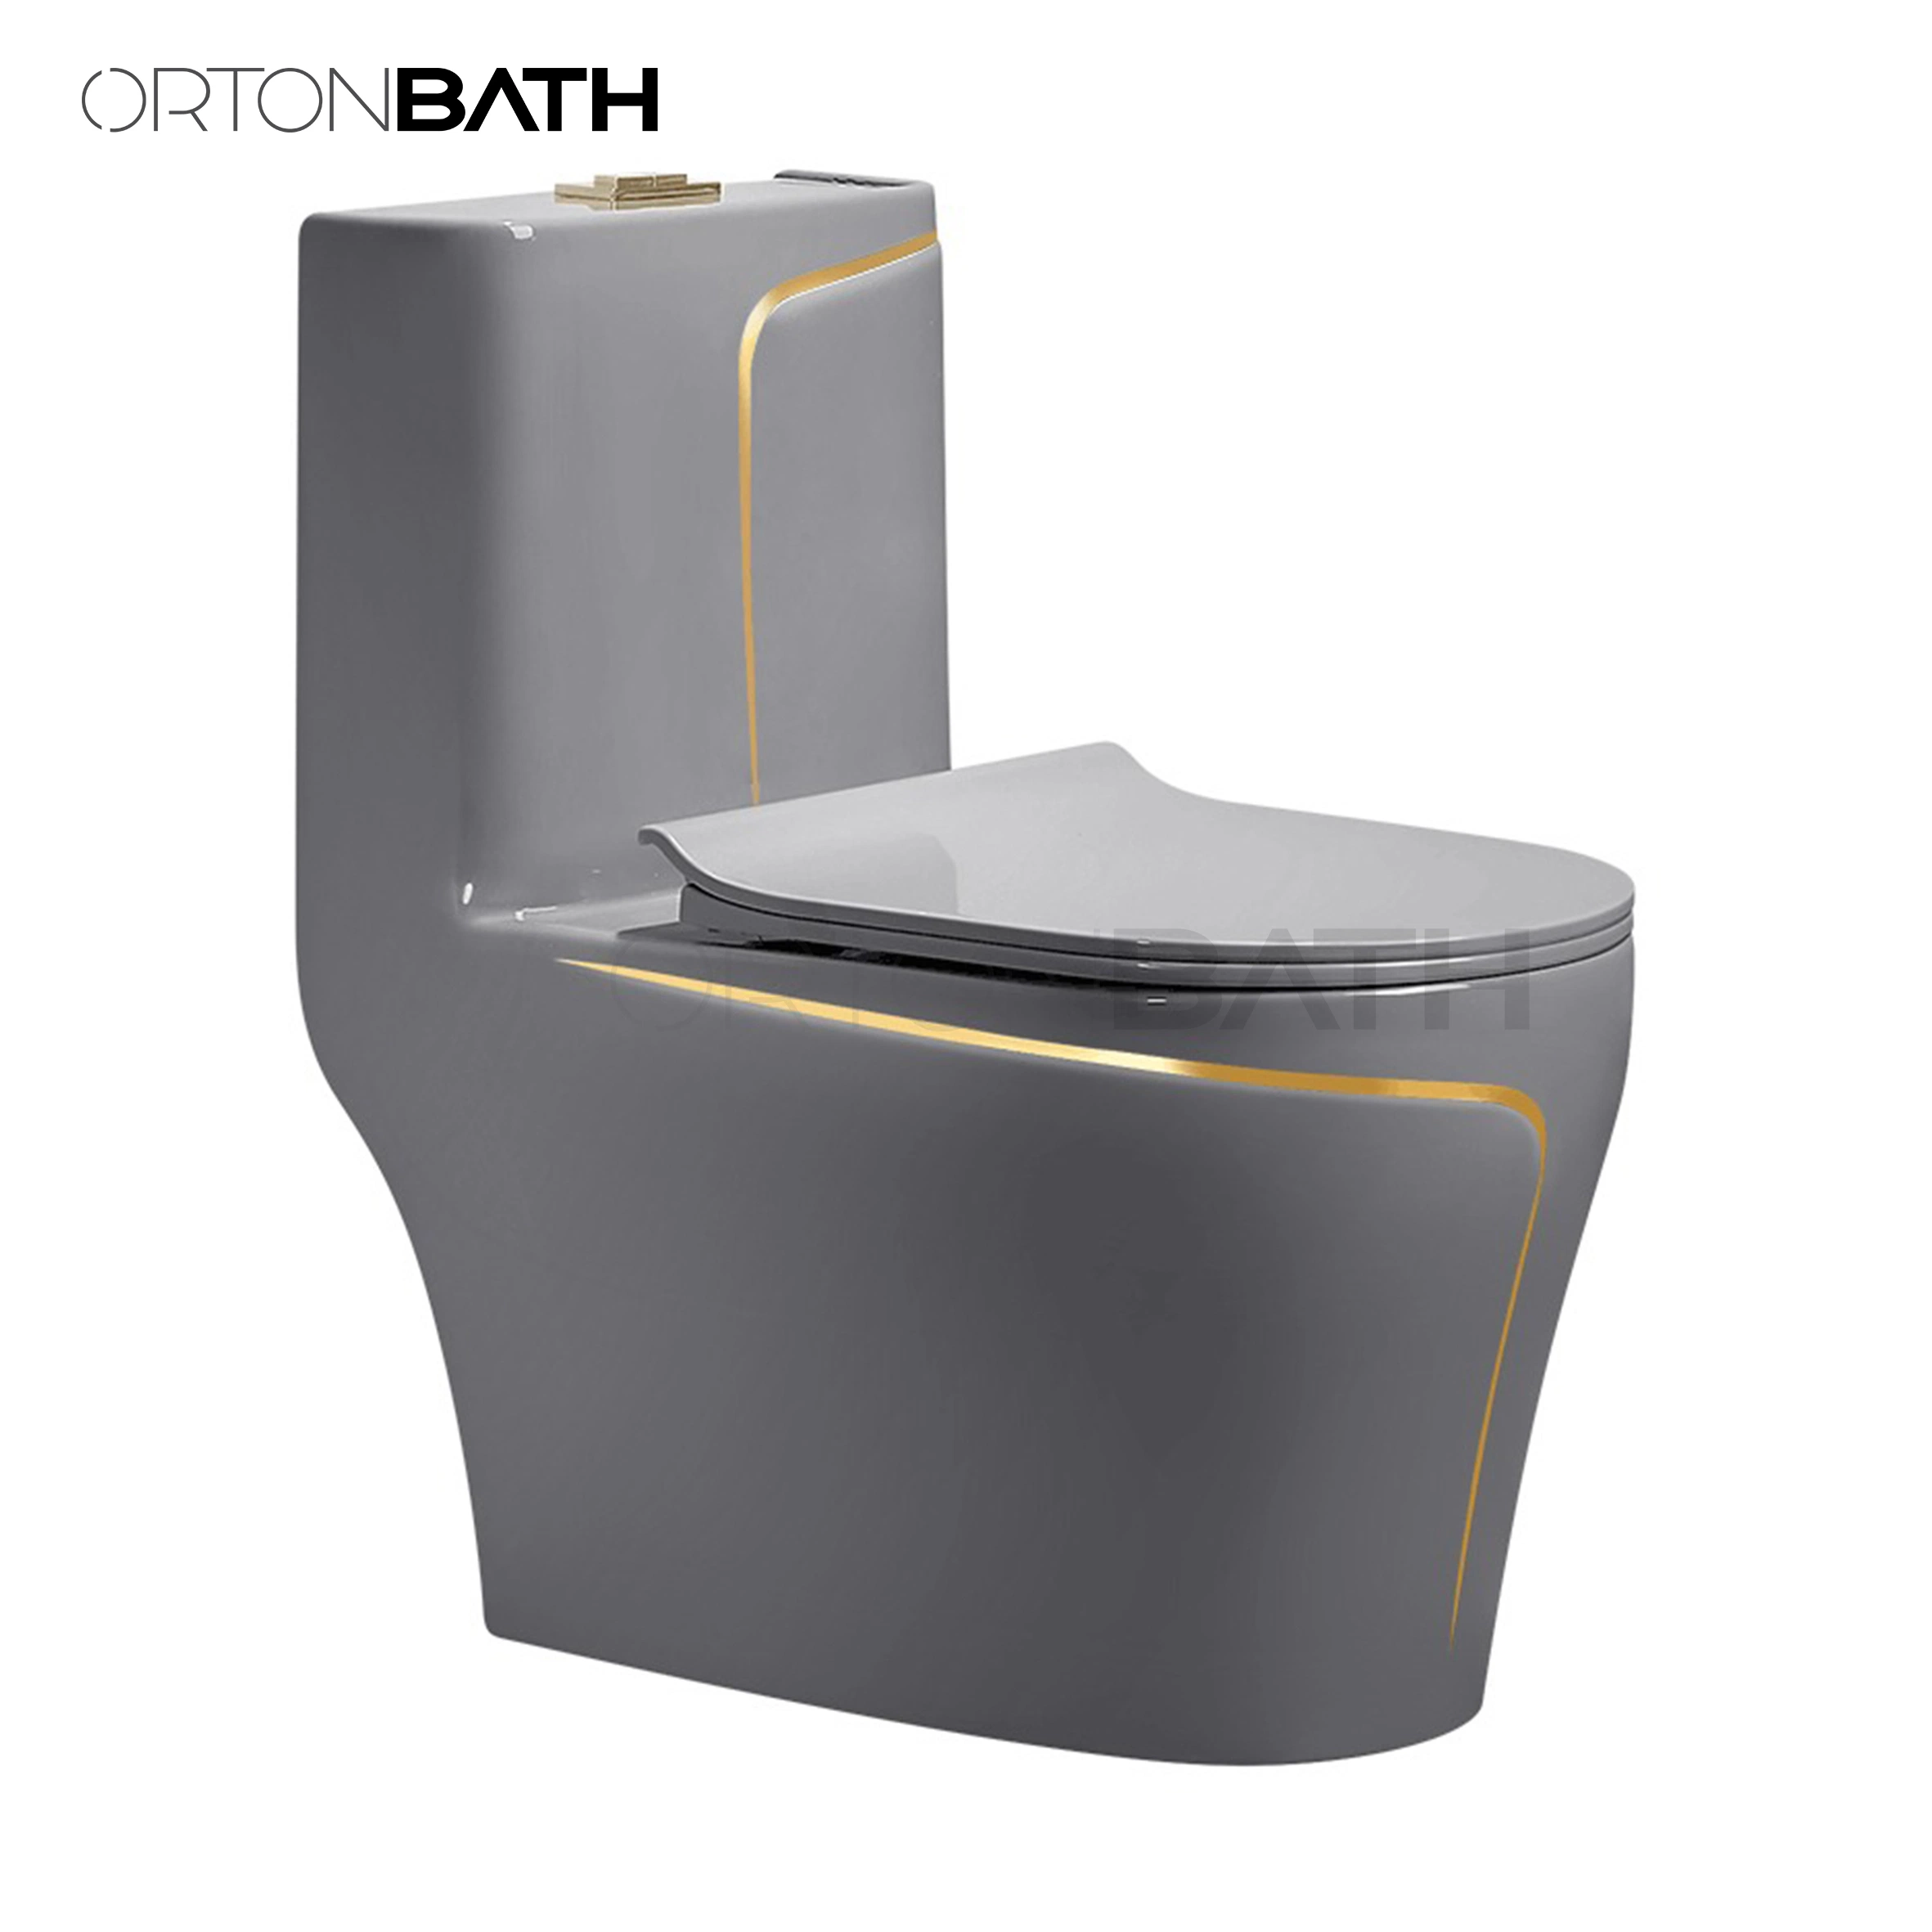 Ortonbath Bathroom Decor Luxury Diamond White Design Bathroom Wc Toilet Seat Farmhouse Toilet, Elongated Toilet with Gold Line Soft Close Seat Cover